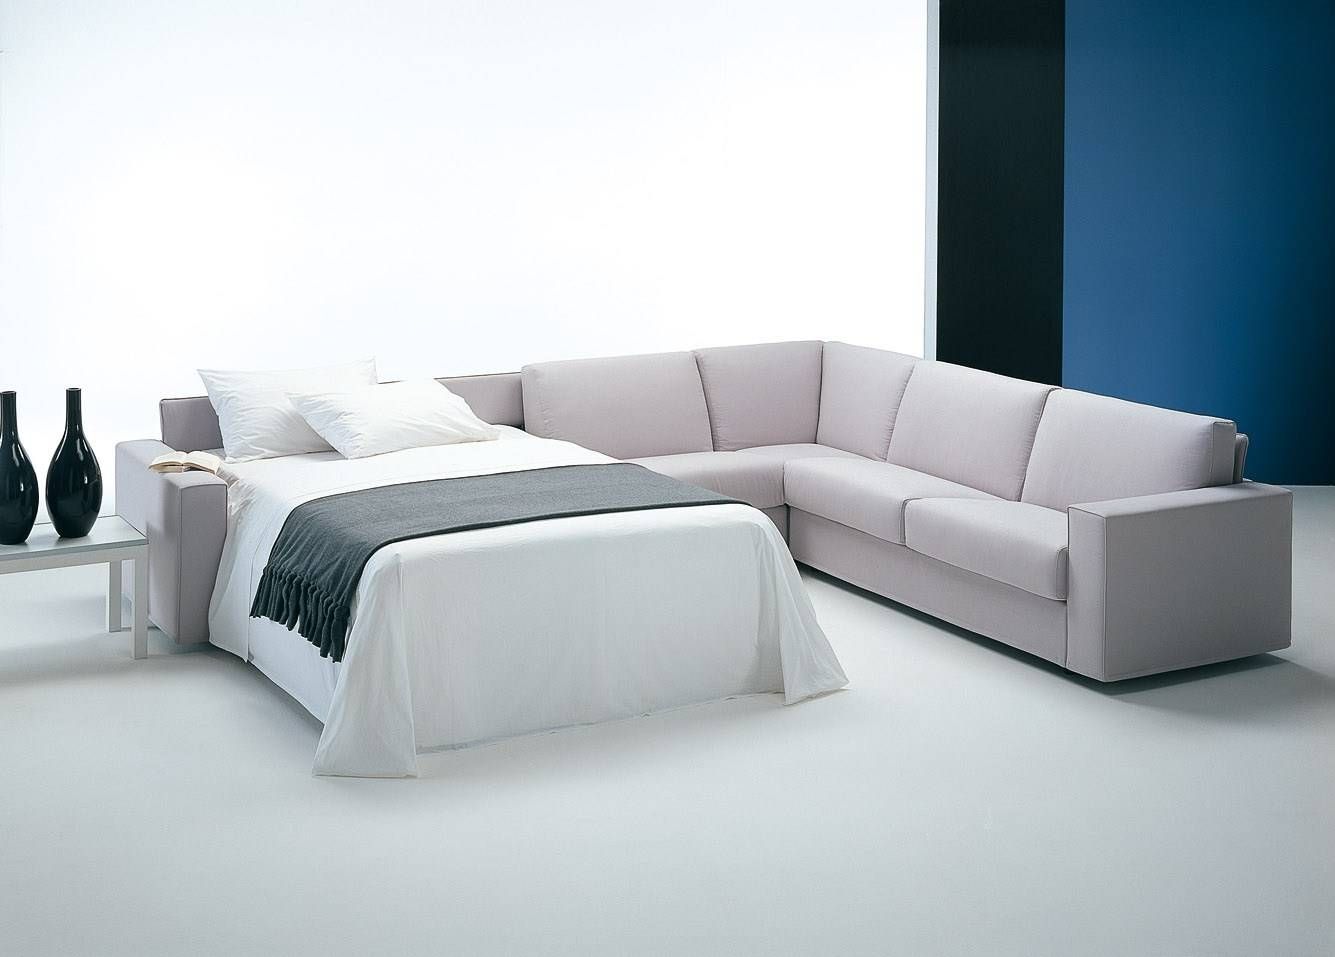 giant plush sofa bed